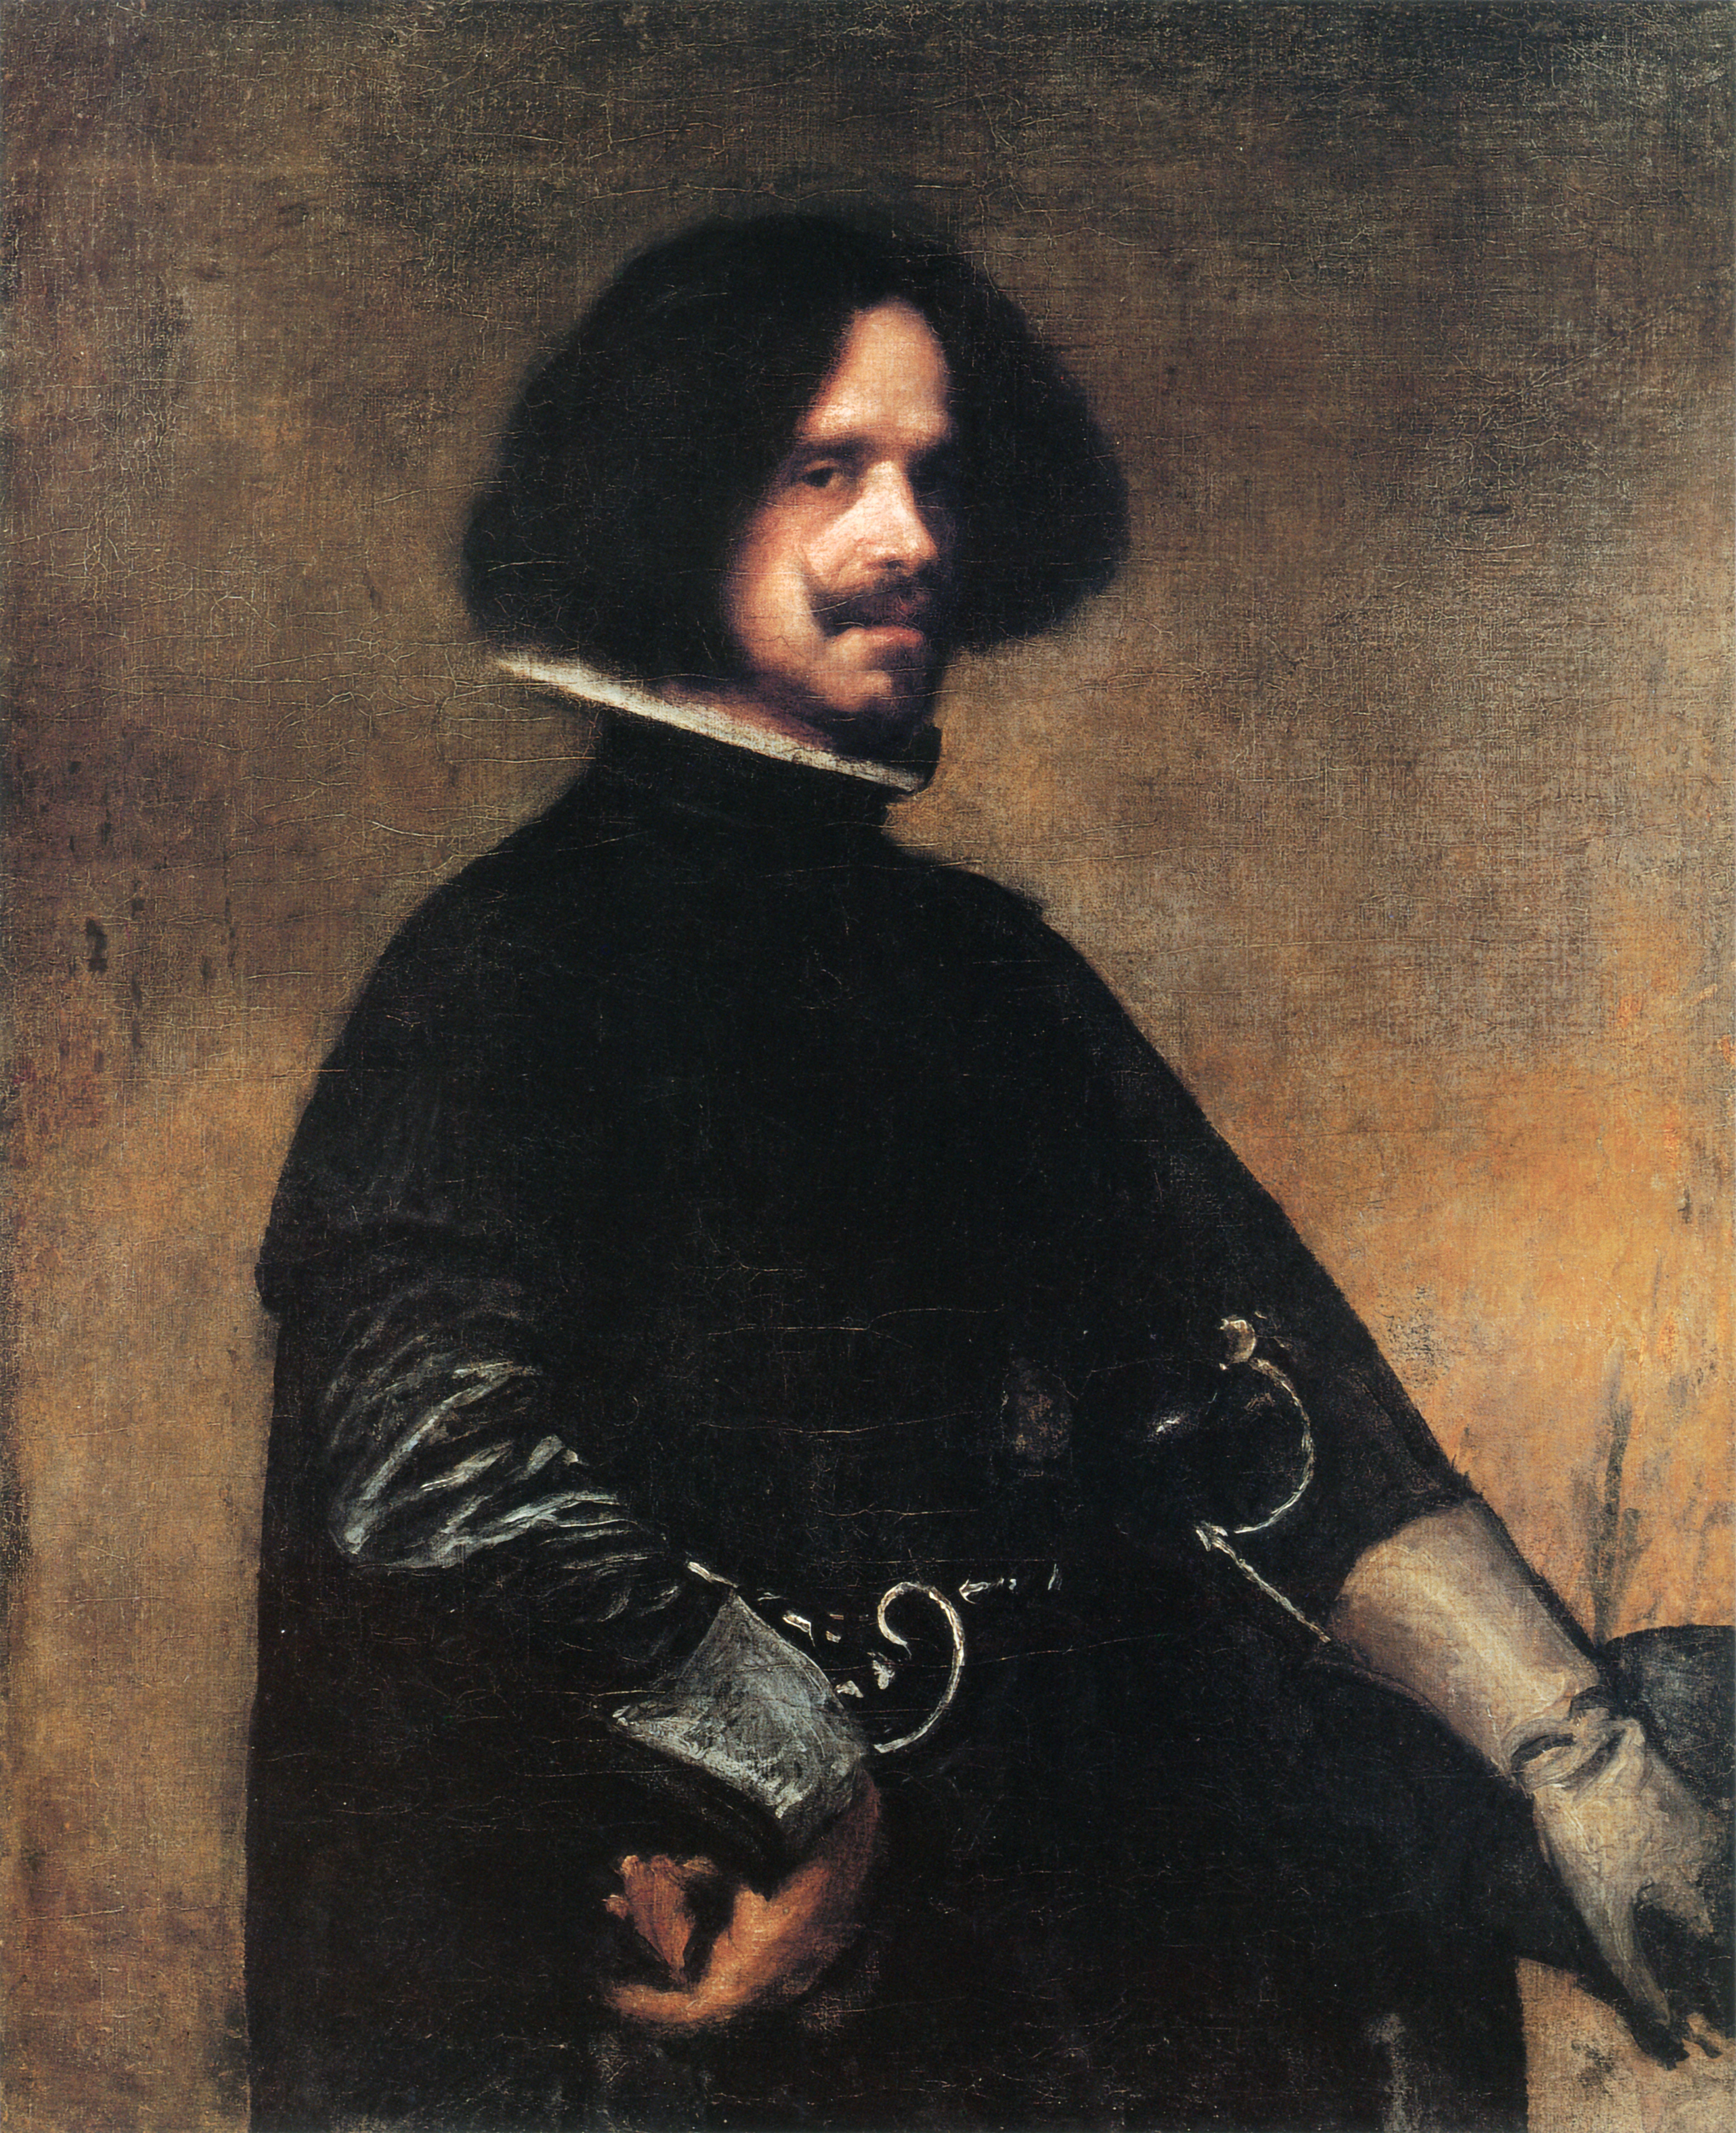 Diego Velázquez - baptized on June 6, 1599 - August 6, 1660